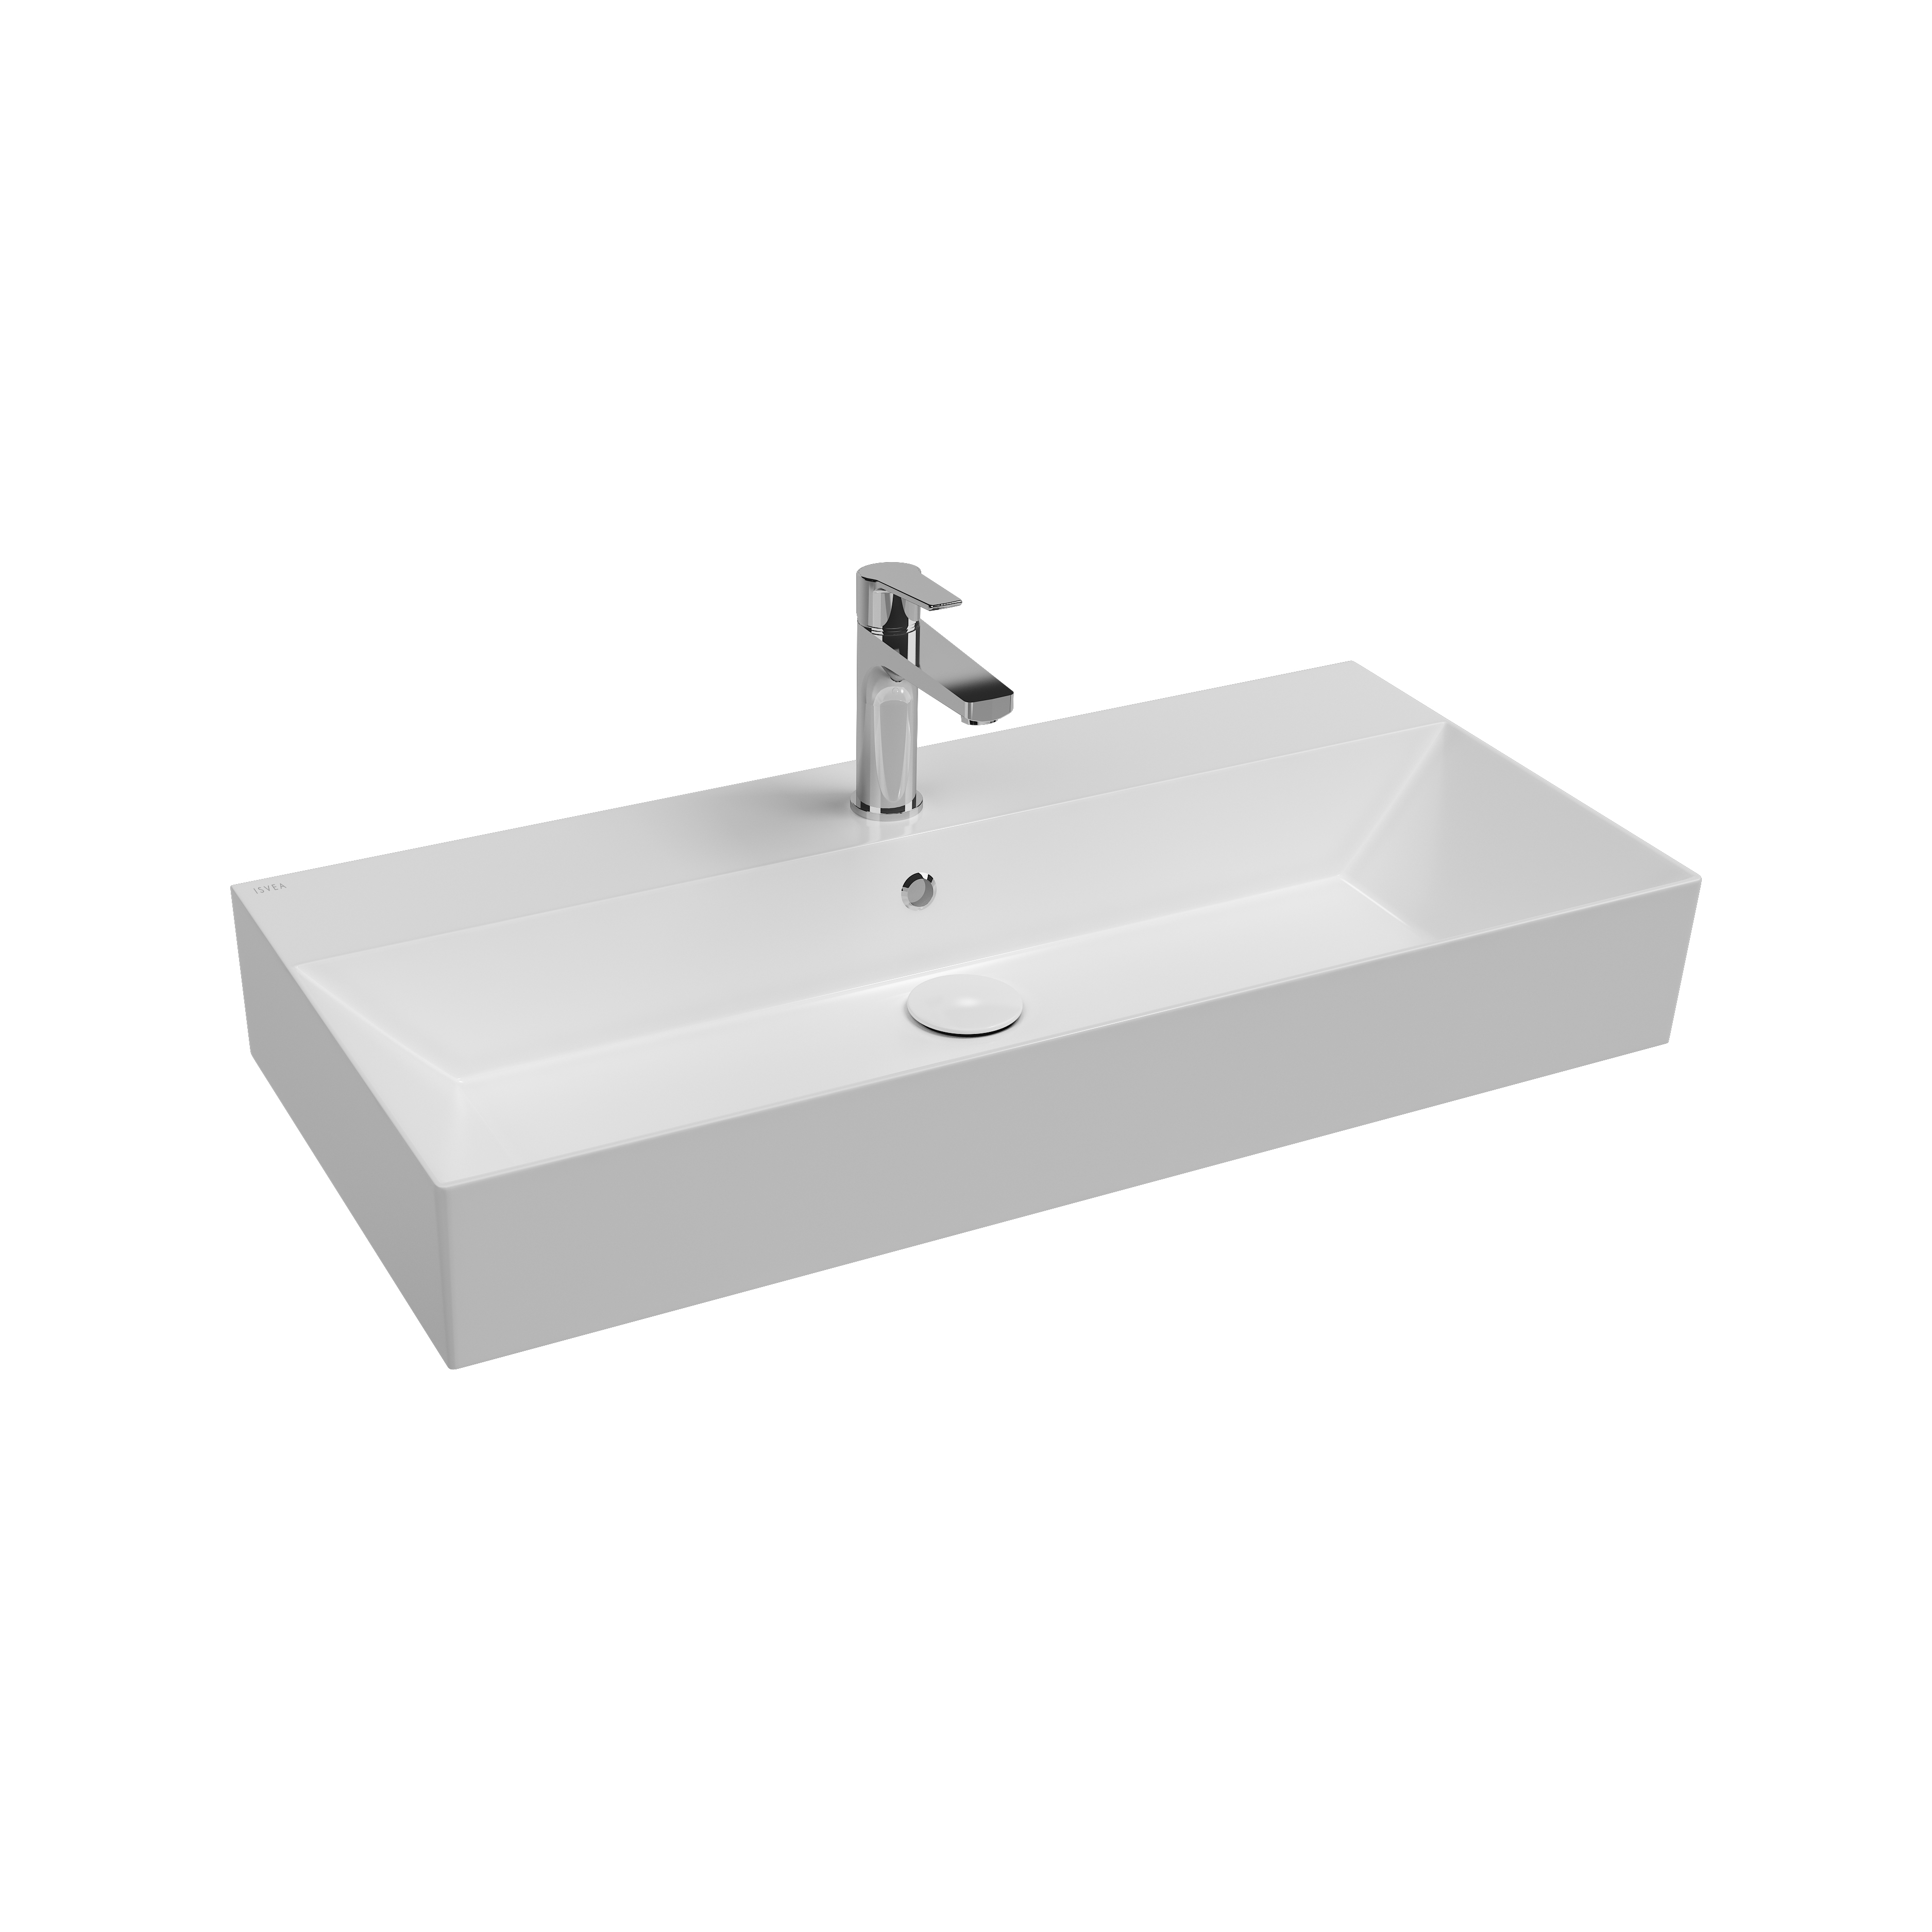 SistemaZ Countertop Washbasin, 90 cm